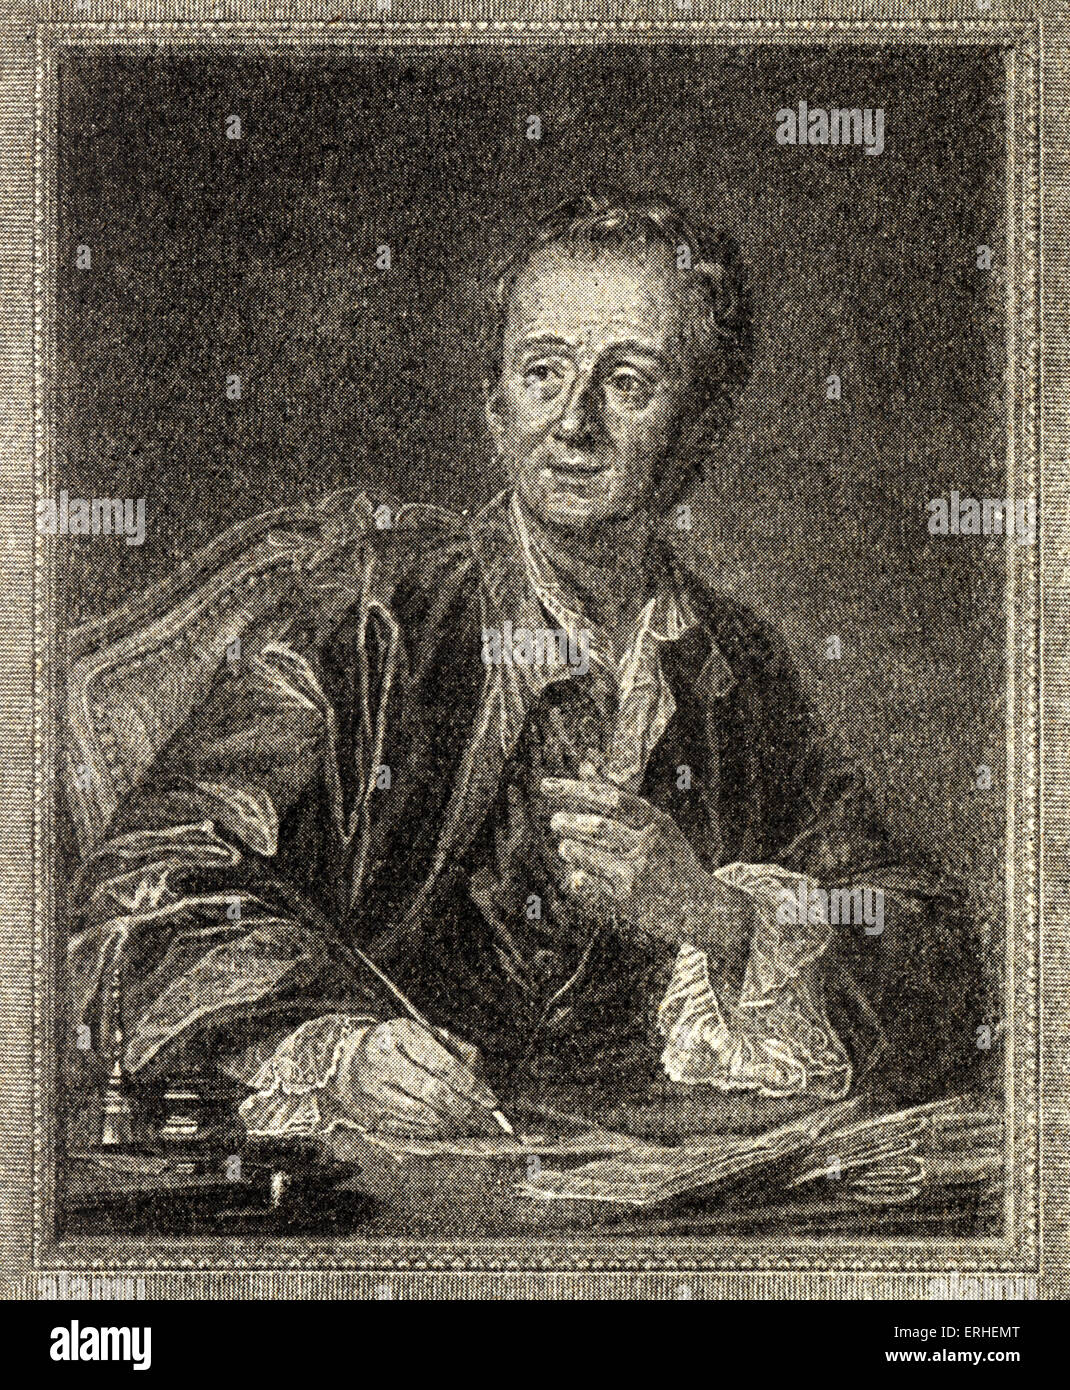 Diderot encyclopedia -Fotos und -Bildmaterial in hoher Auflösung – Alamy